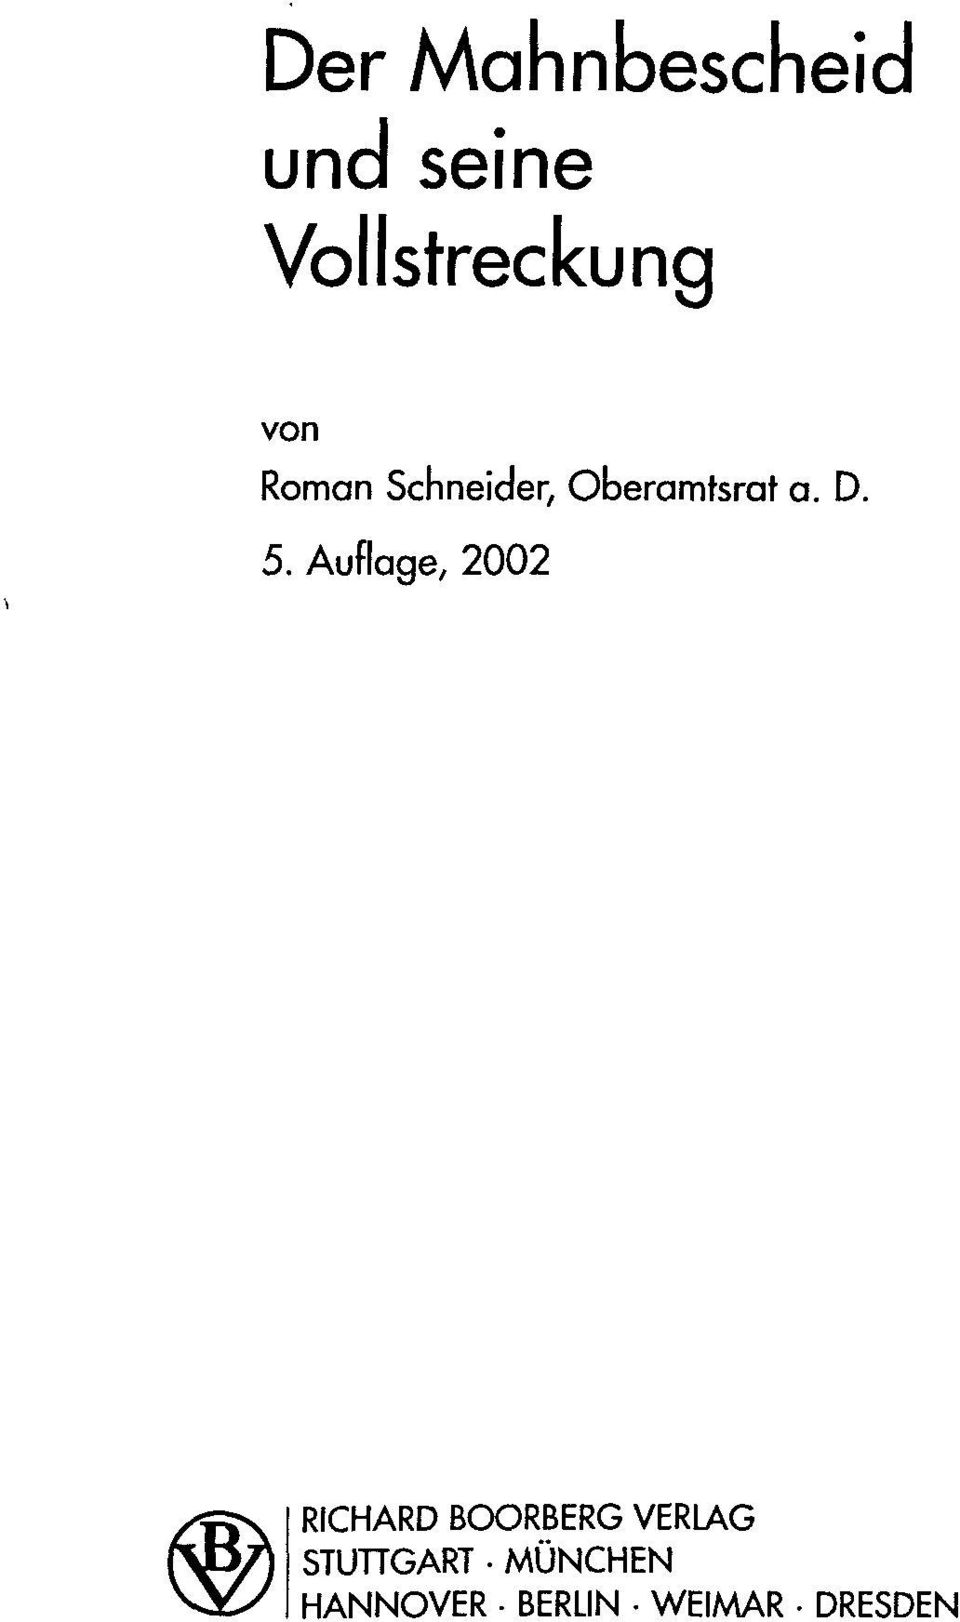 Auflage, 2002 RICHARD BOORBERG VERLAG